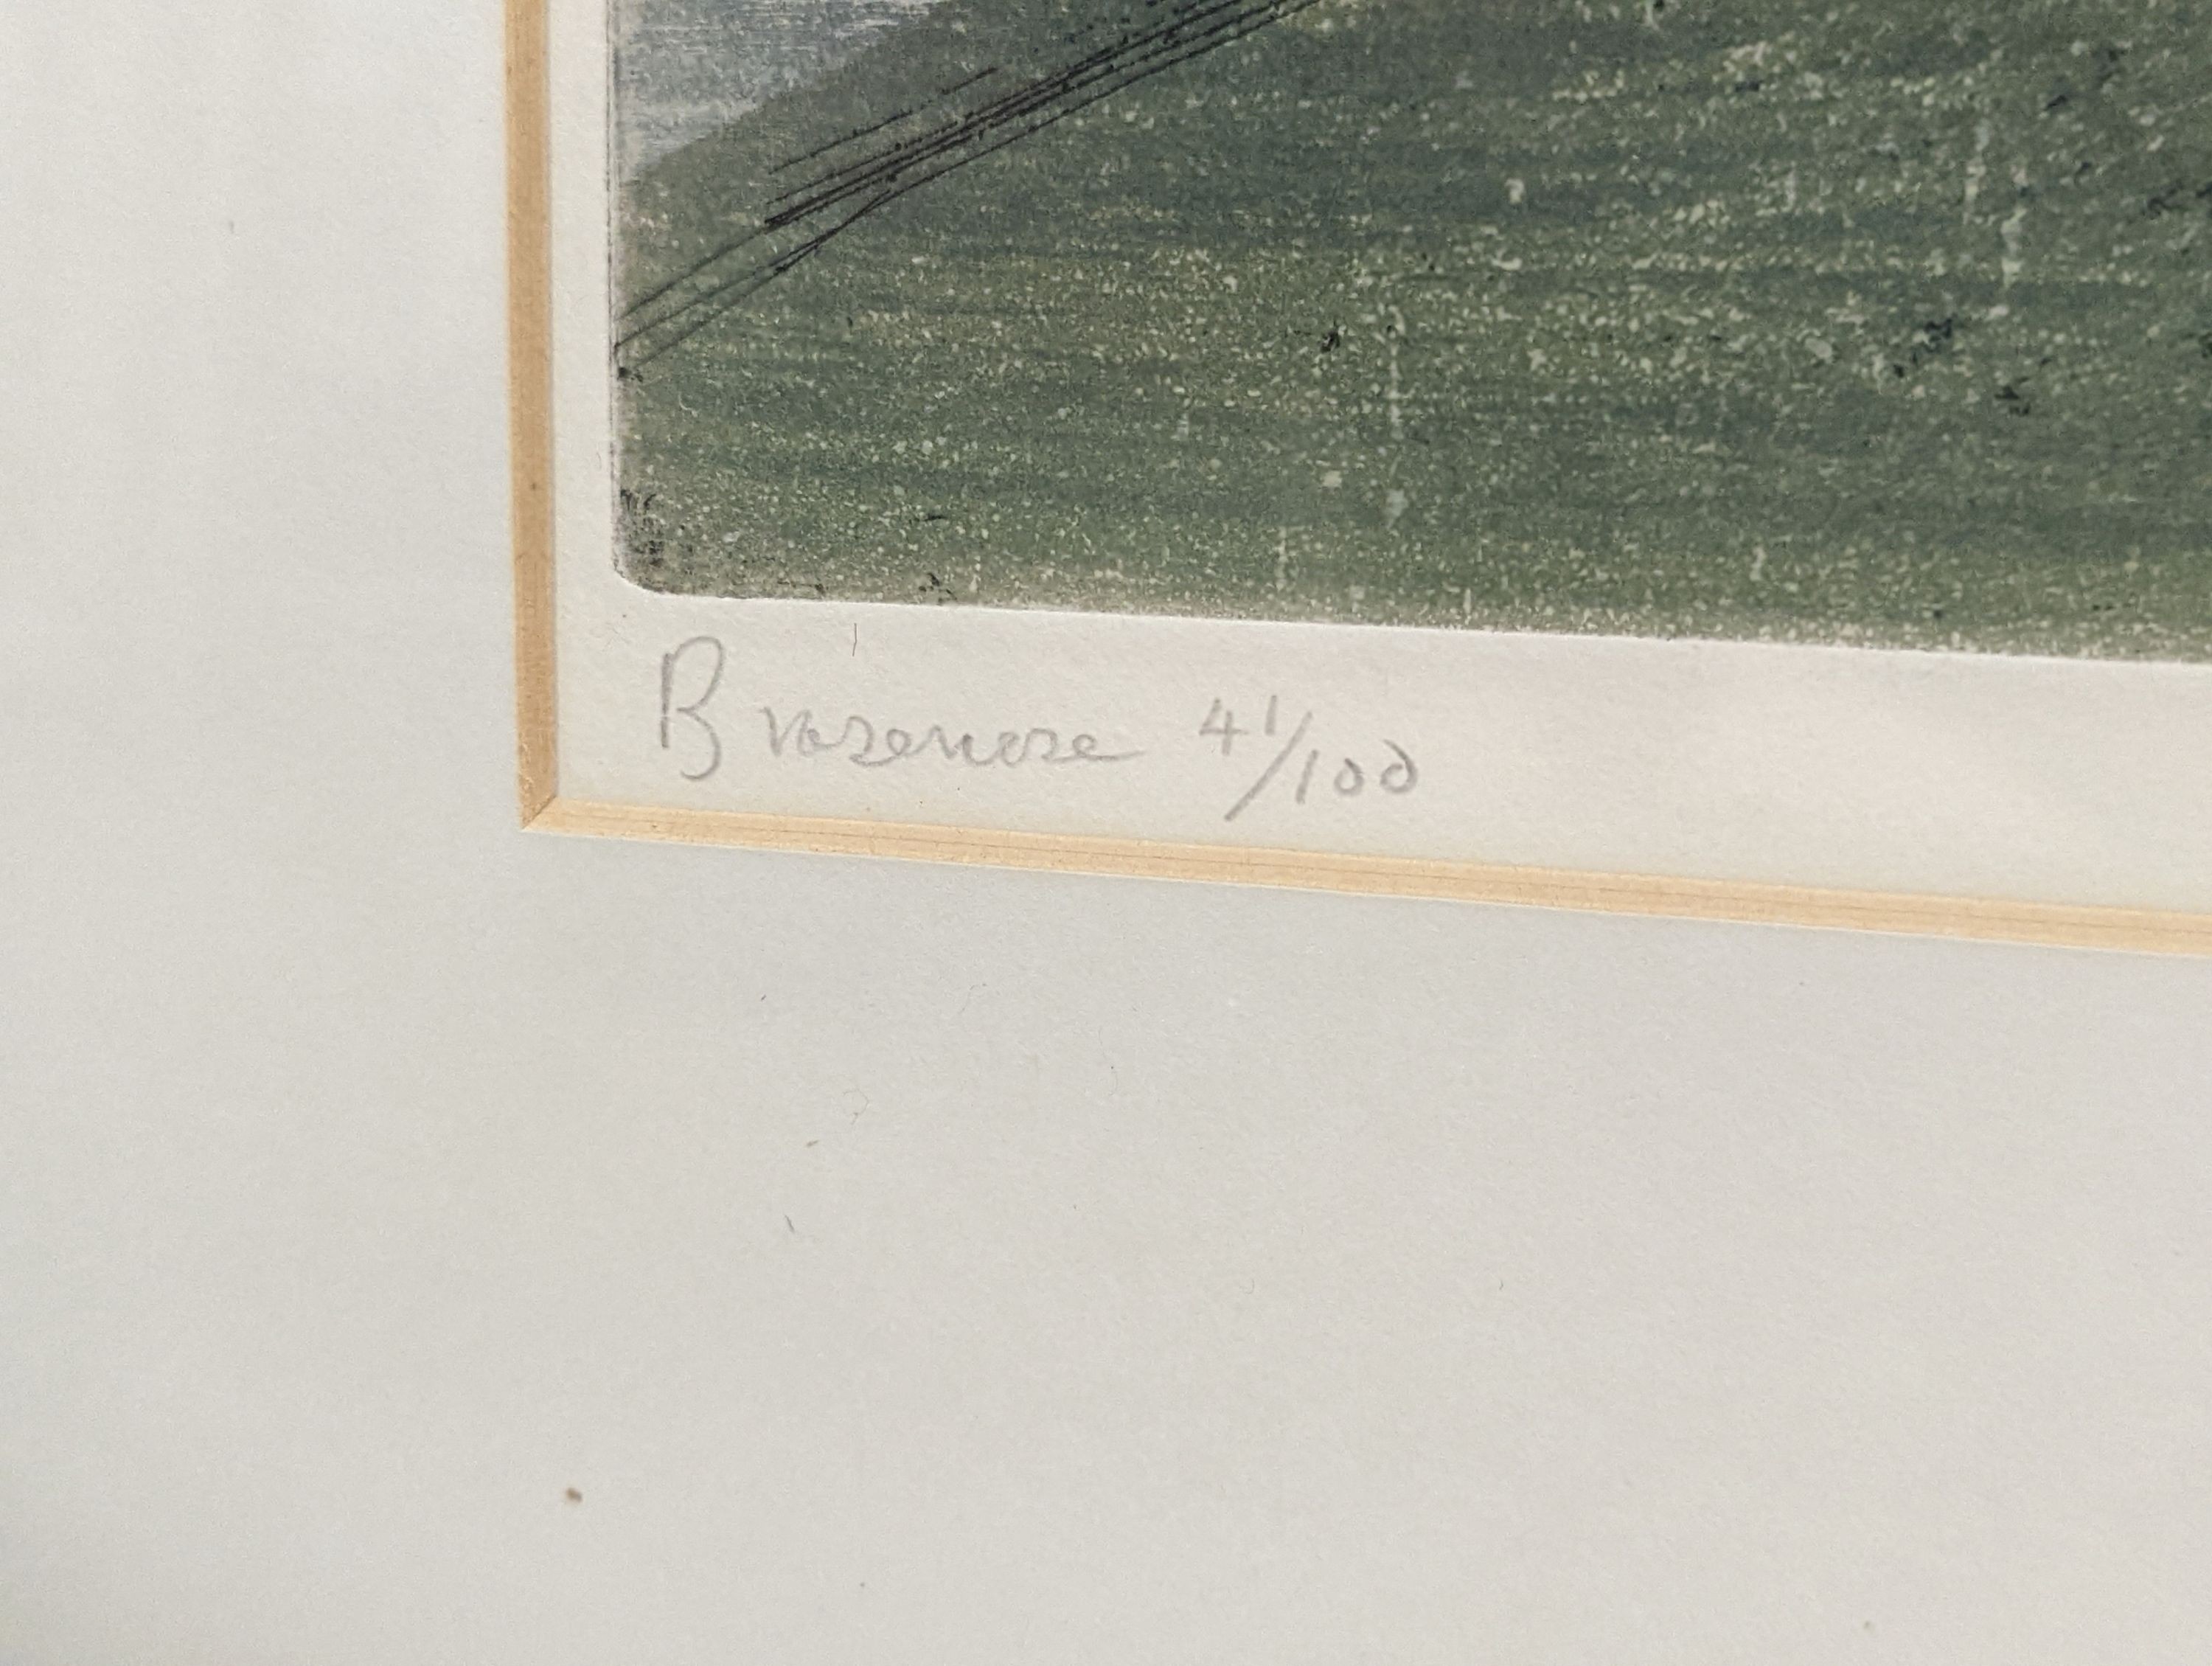 Richard Beer, limited edition print, 'Brasenose', signed, 41/100, 58 x 43cm